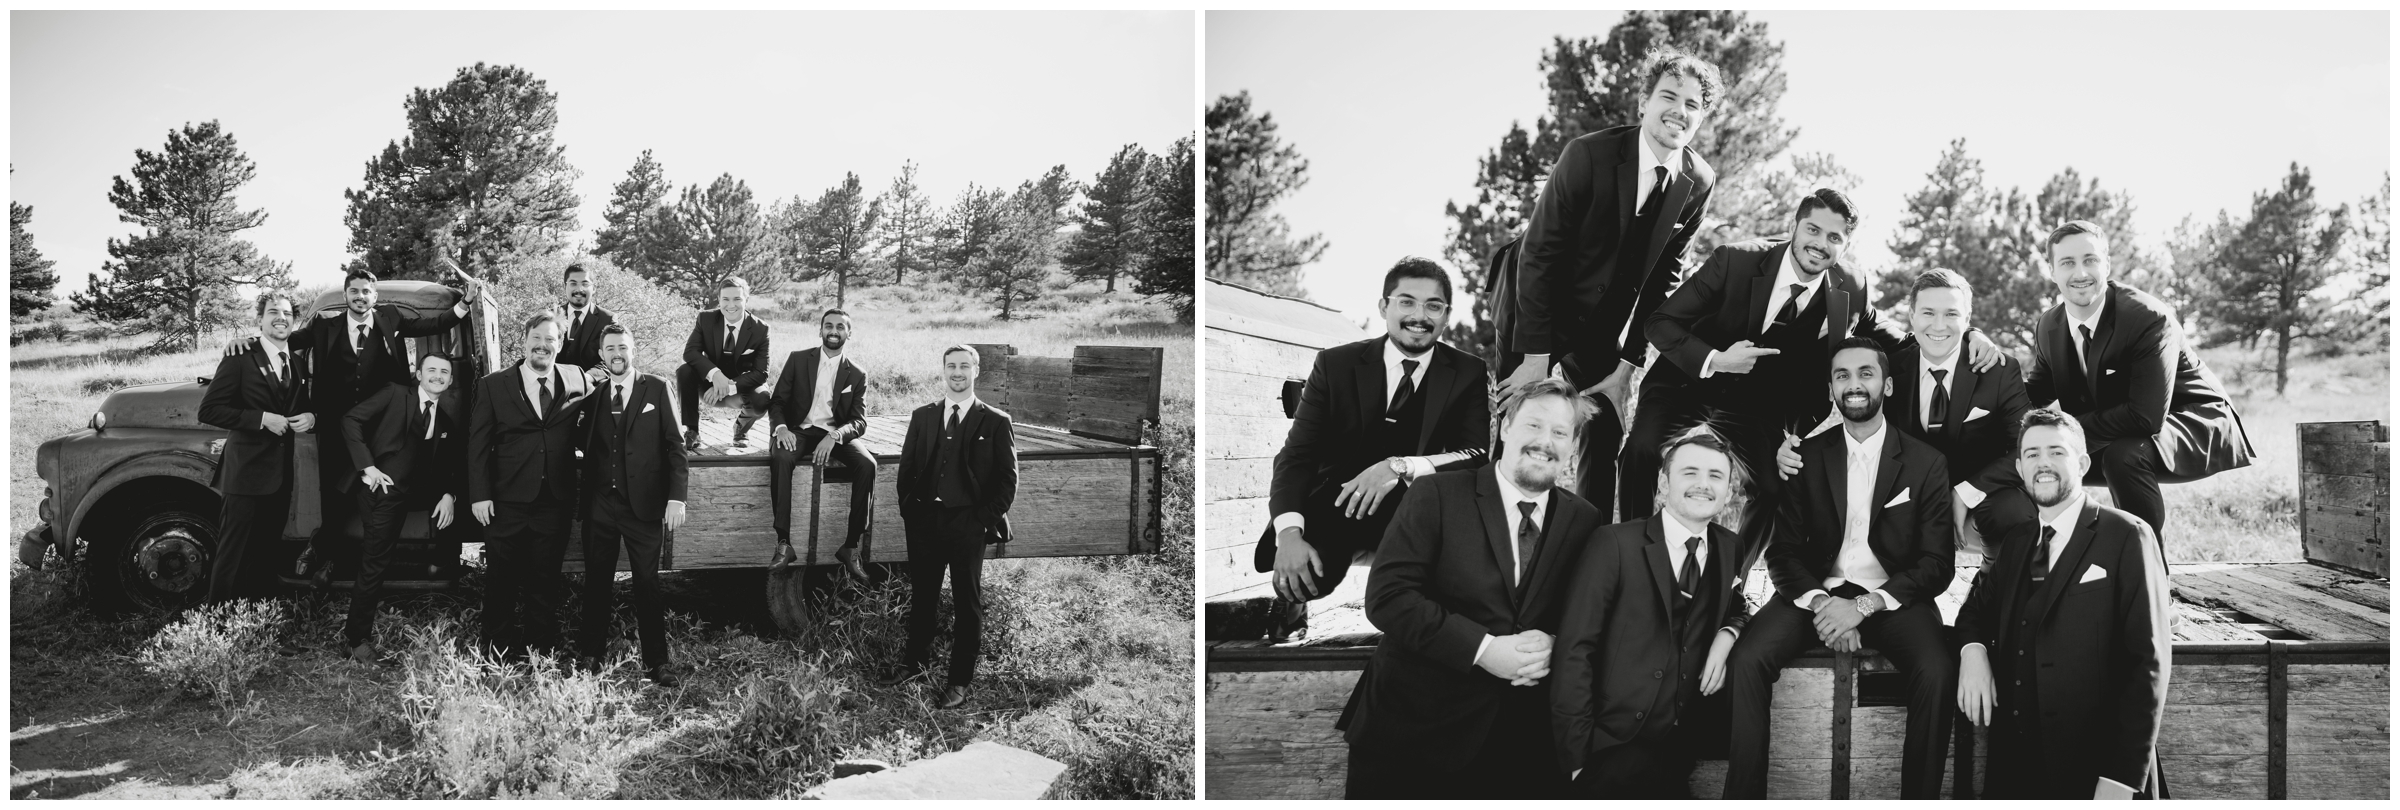 groomsmen posing on vintage truck at Lionscrest Manor Colorado wedding